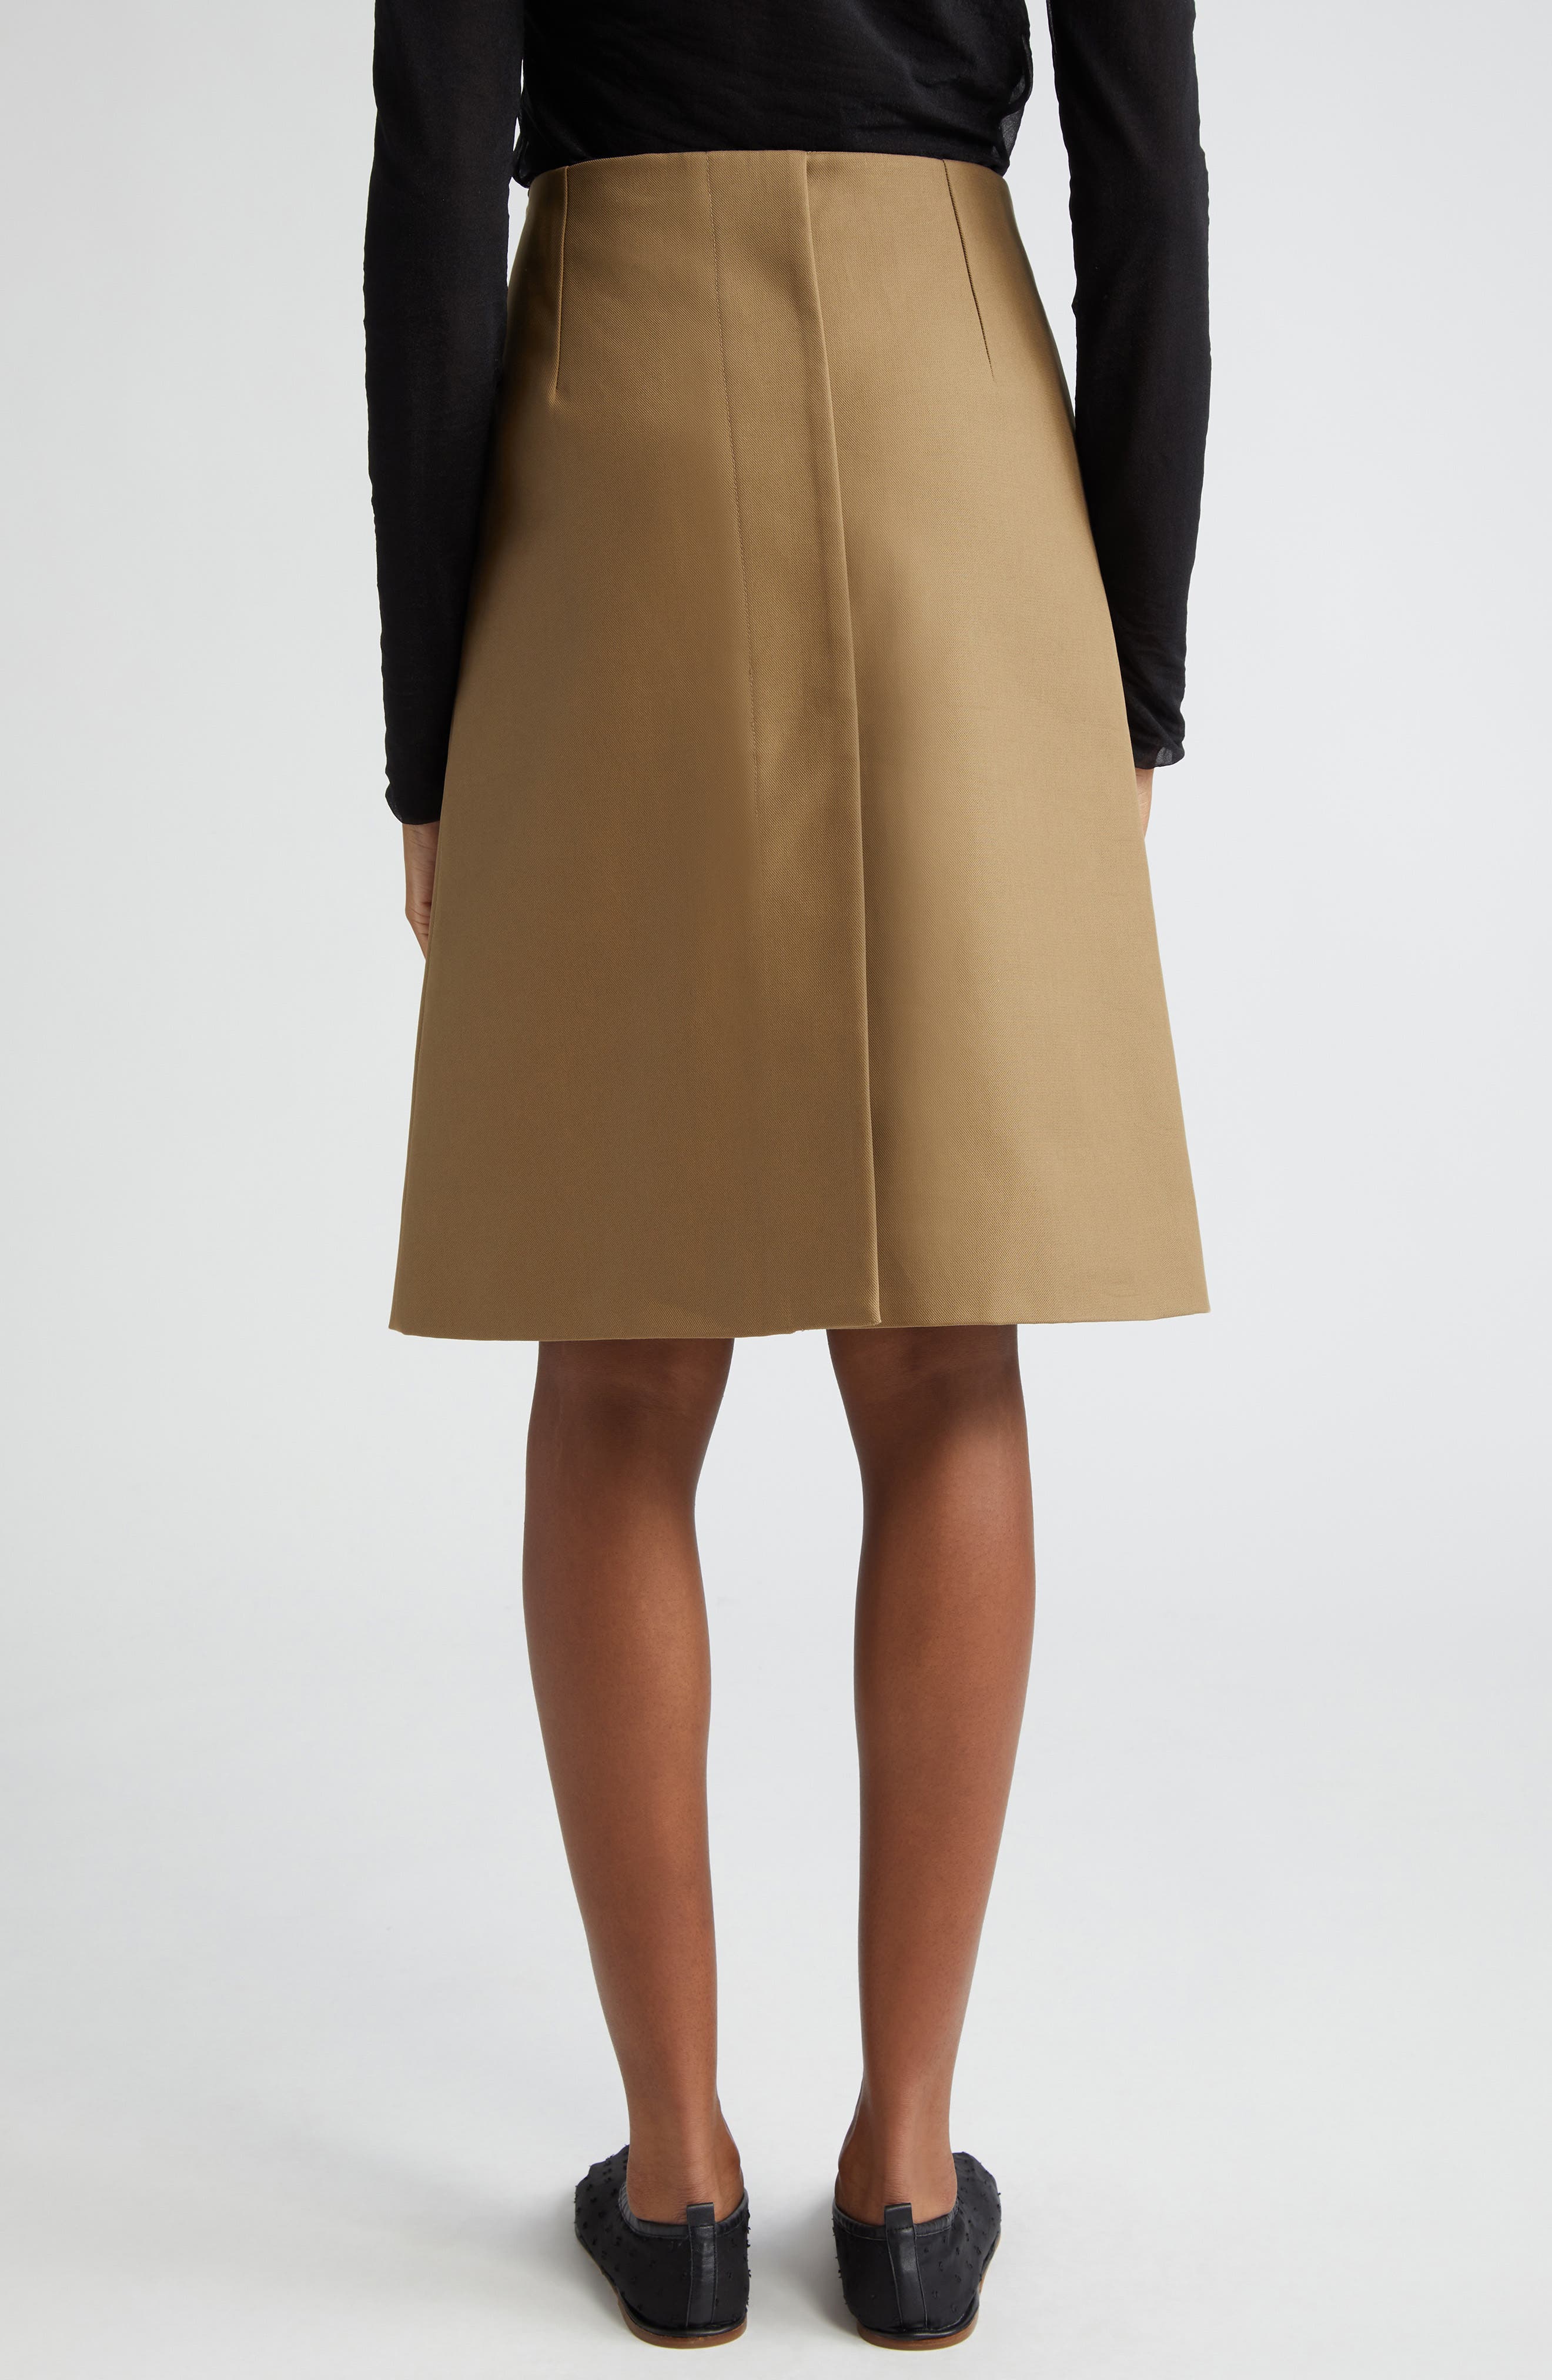 Thom Browne twill-weave pencil skirt - Black